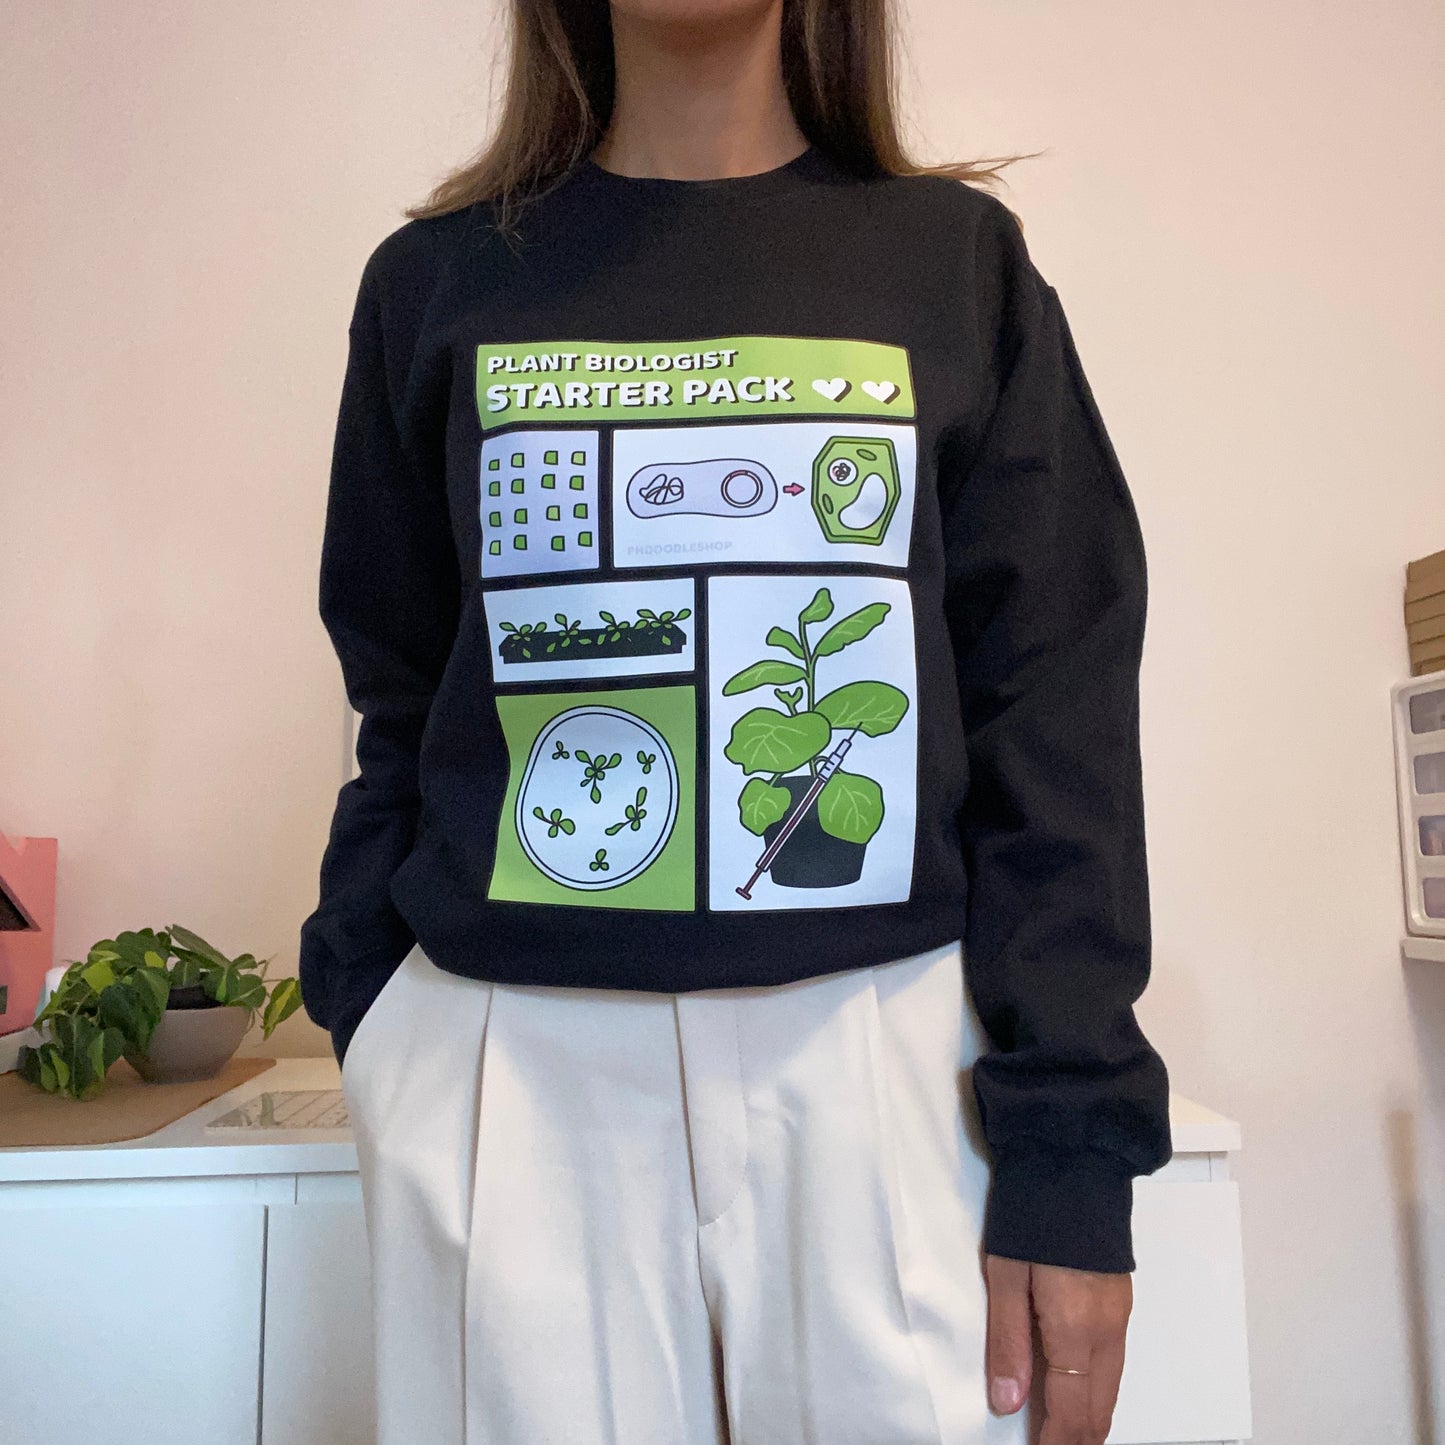 Plant Biologist Starter Pack Sweatshirt